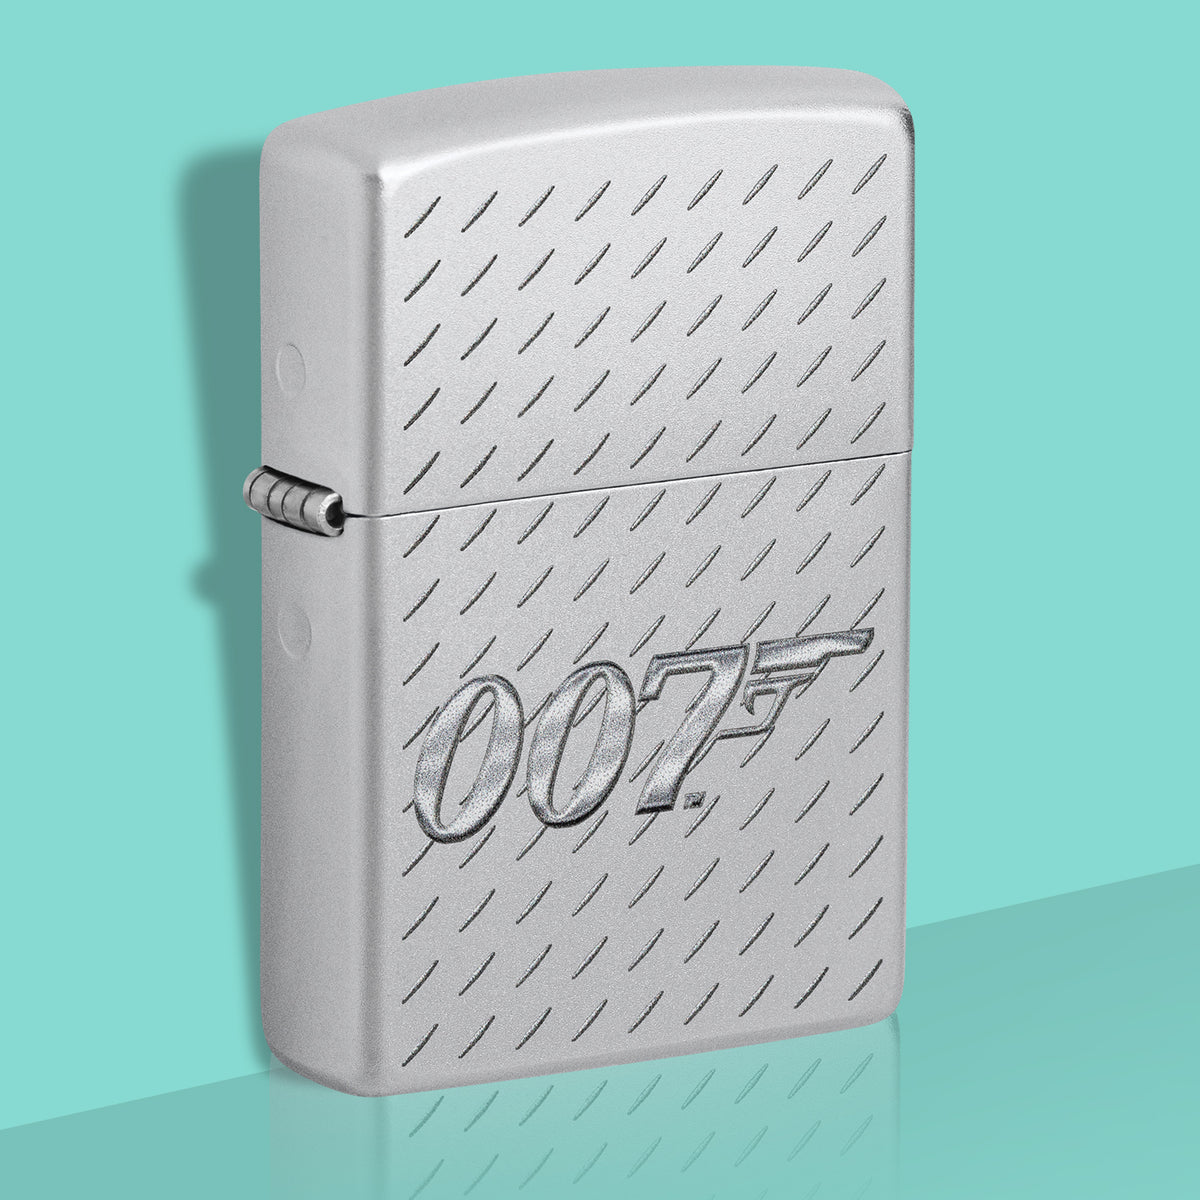 James Bond Zippo Lighter - Textured Chrome Edition